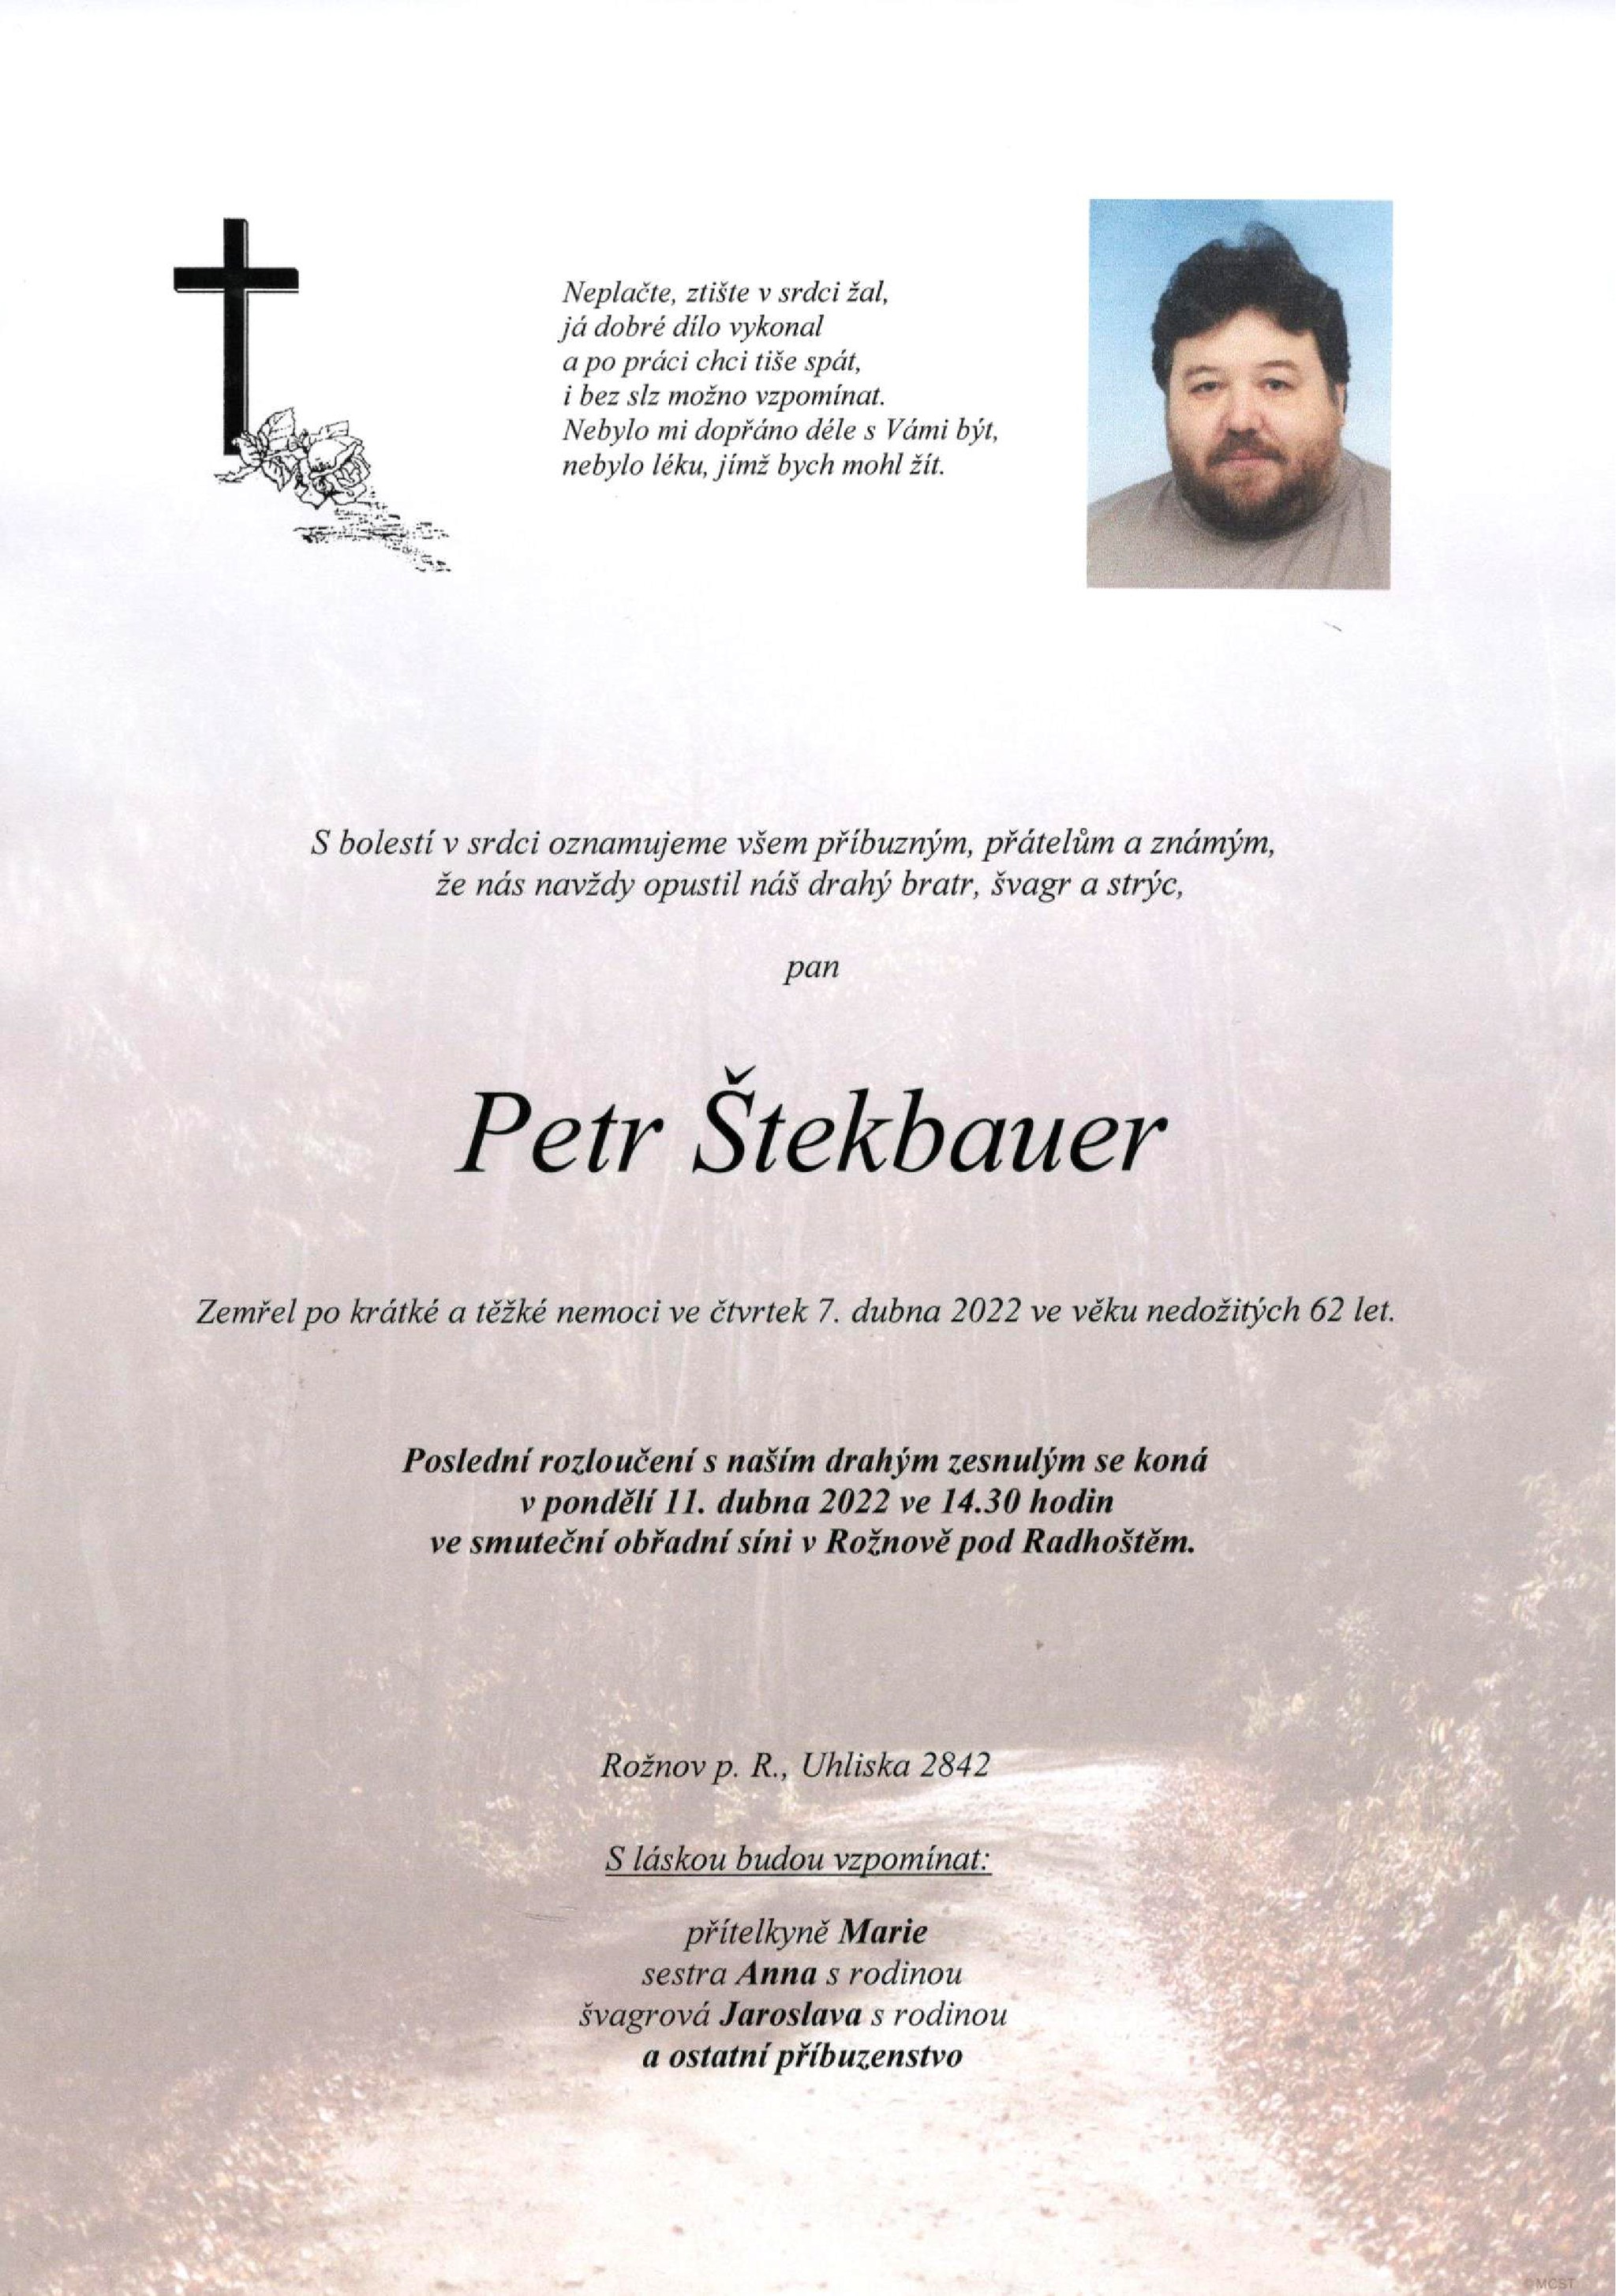 Petr Štekbauer